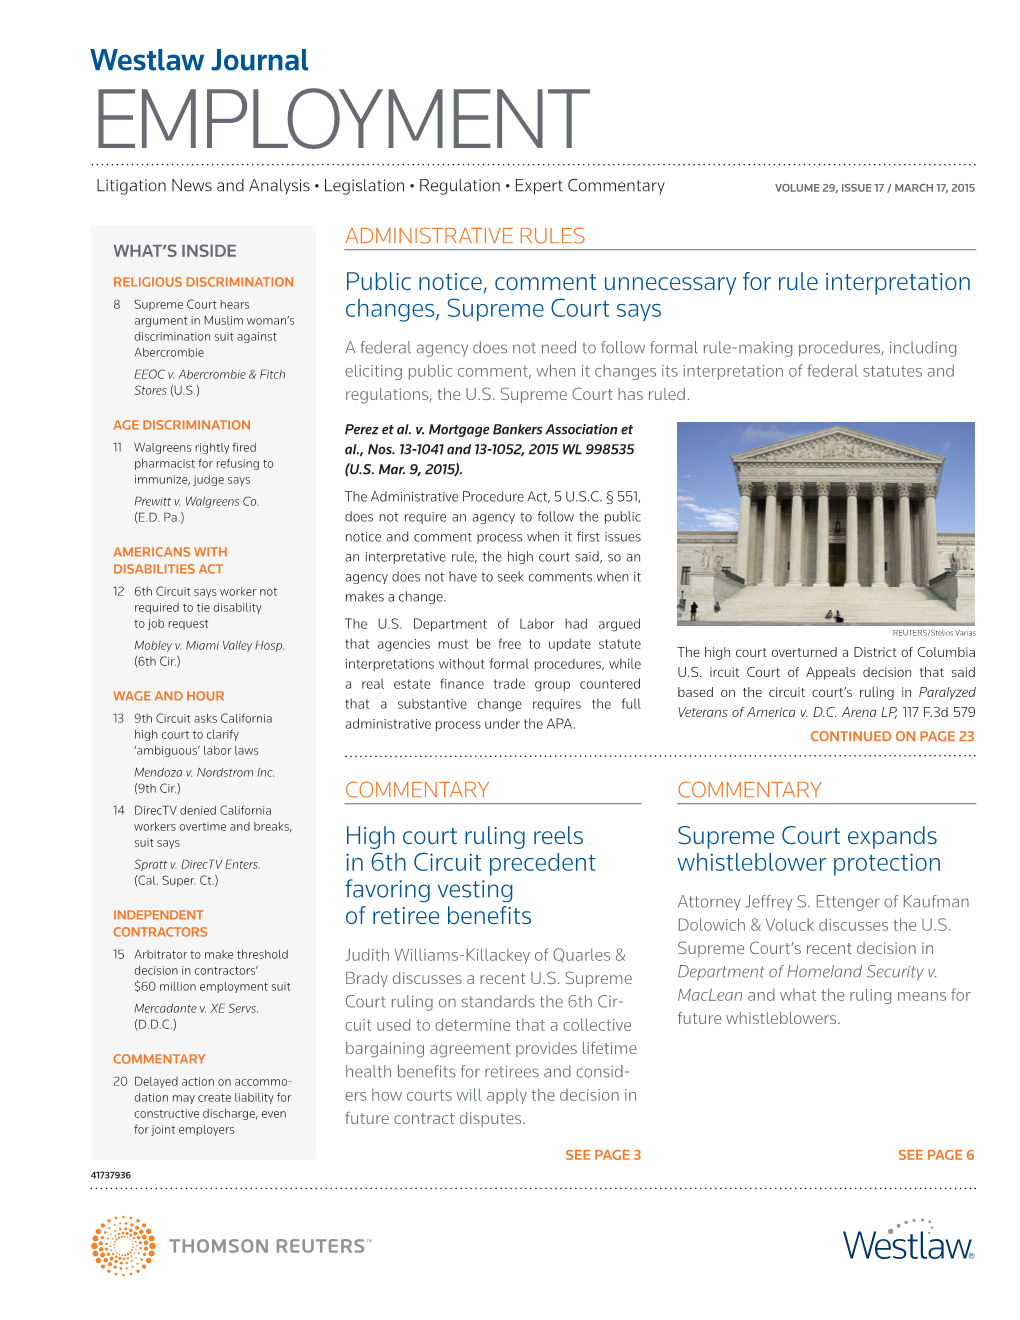 Westlaw Journal EMPLOYMENT Litigation News and Analysis • Legislation • Regulation • Expert Commentary VOLUME 29, ISSUE 17 / MARCH 17, 2015